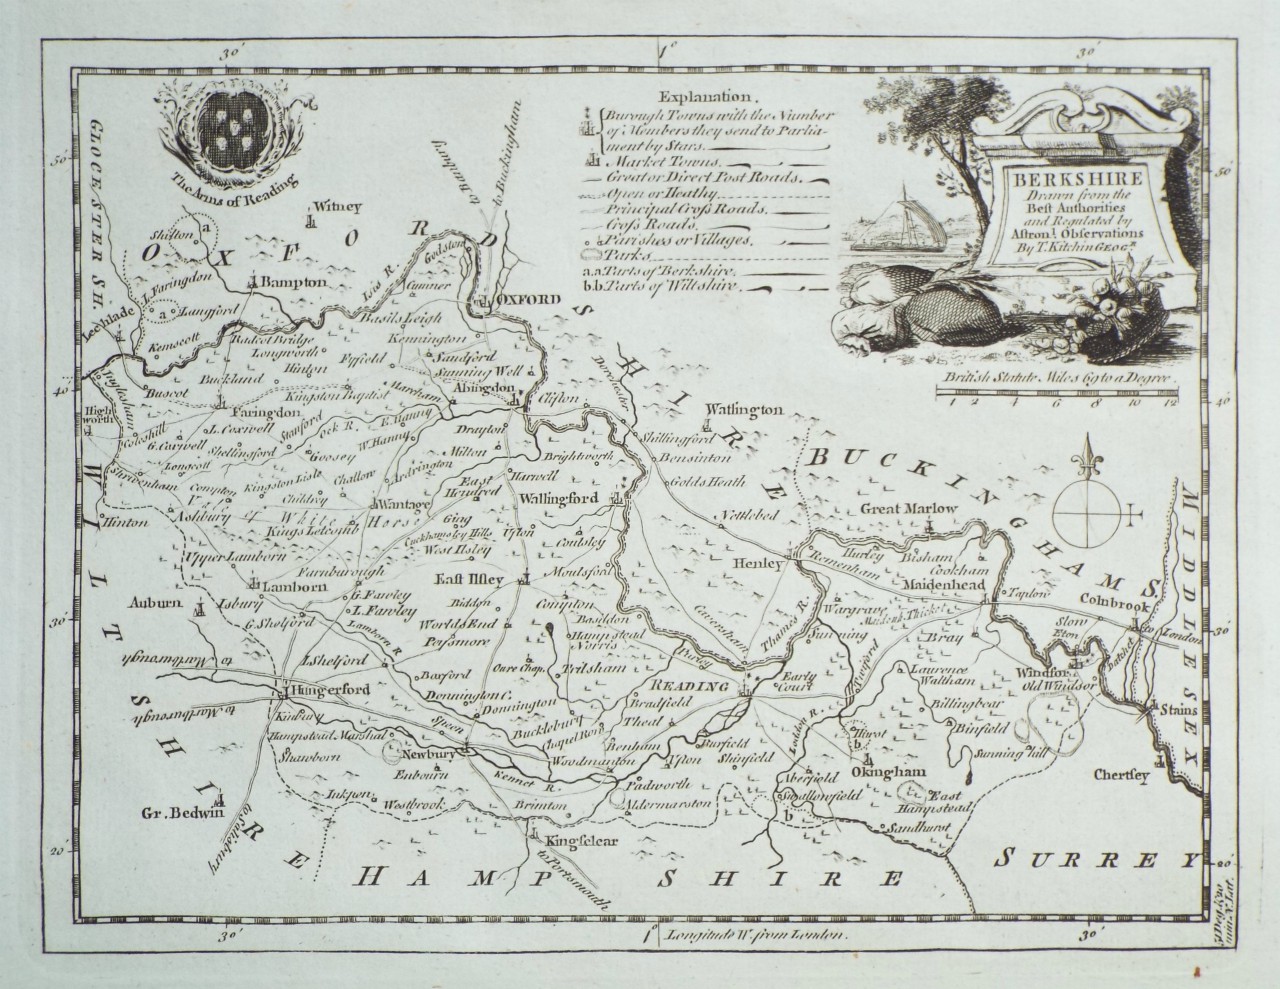 Map of Berkshire